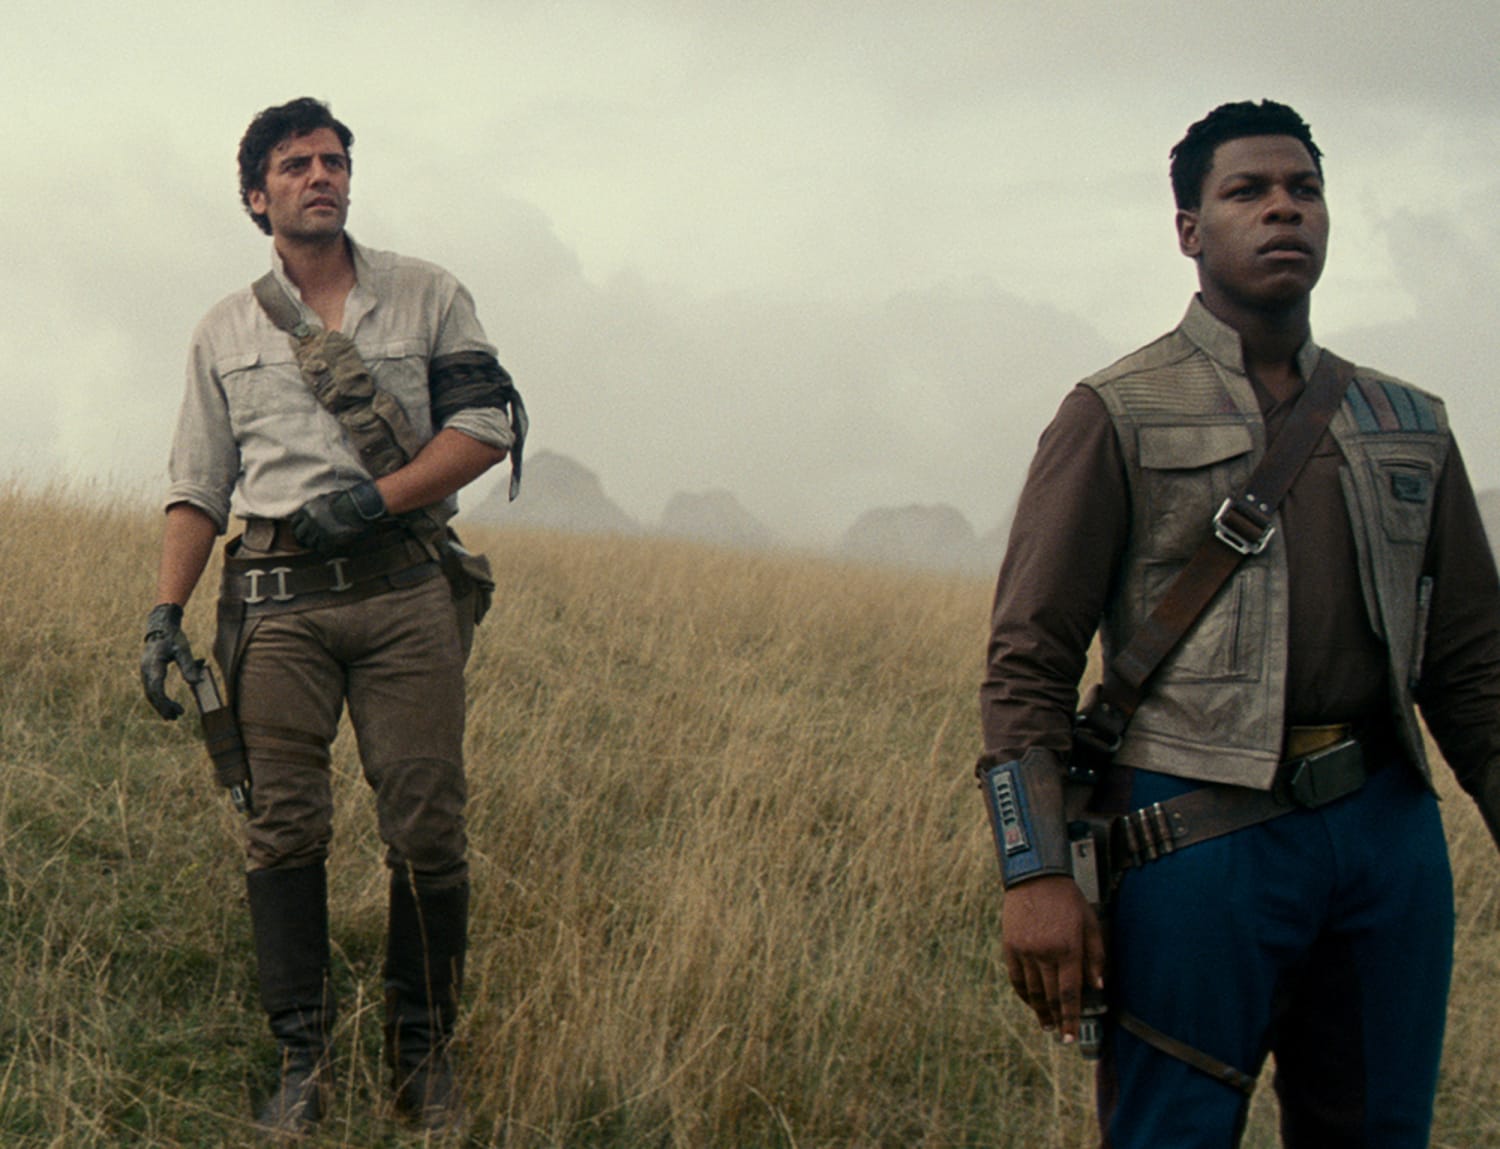 Star Wars: The Rise of Skywalker' director J.J. Abrams hints at